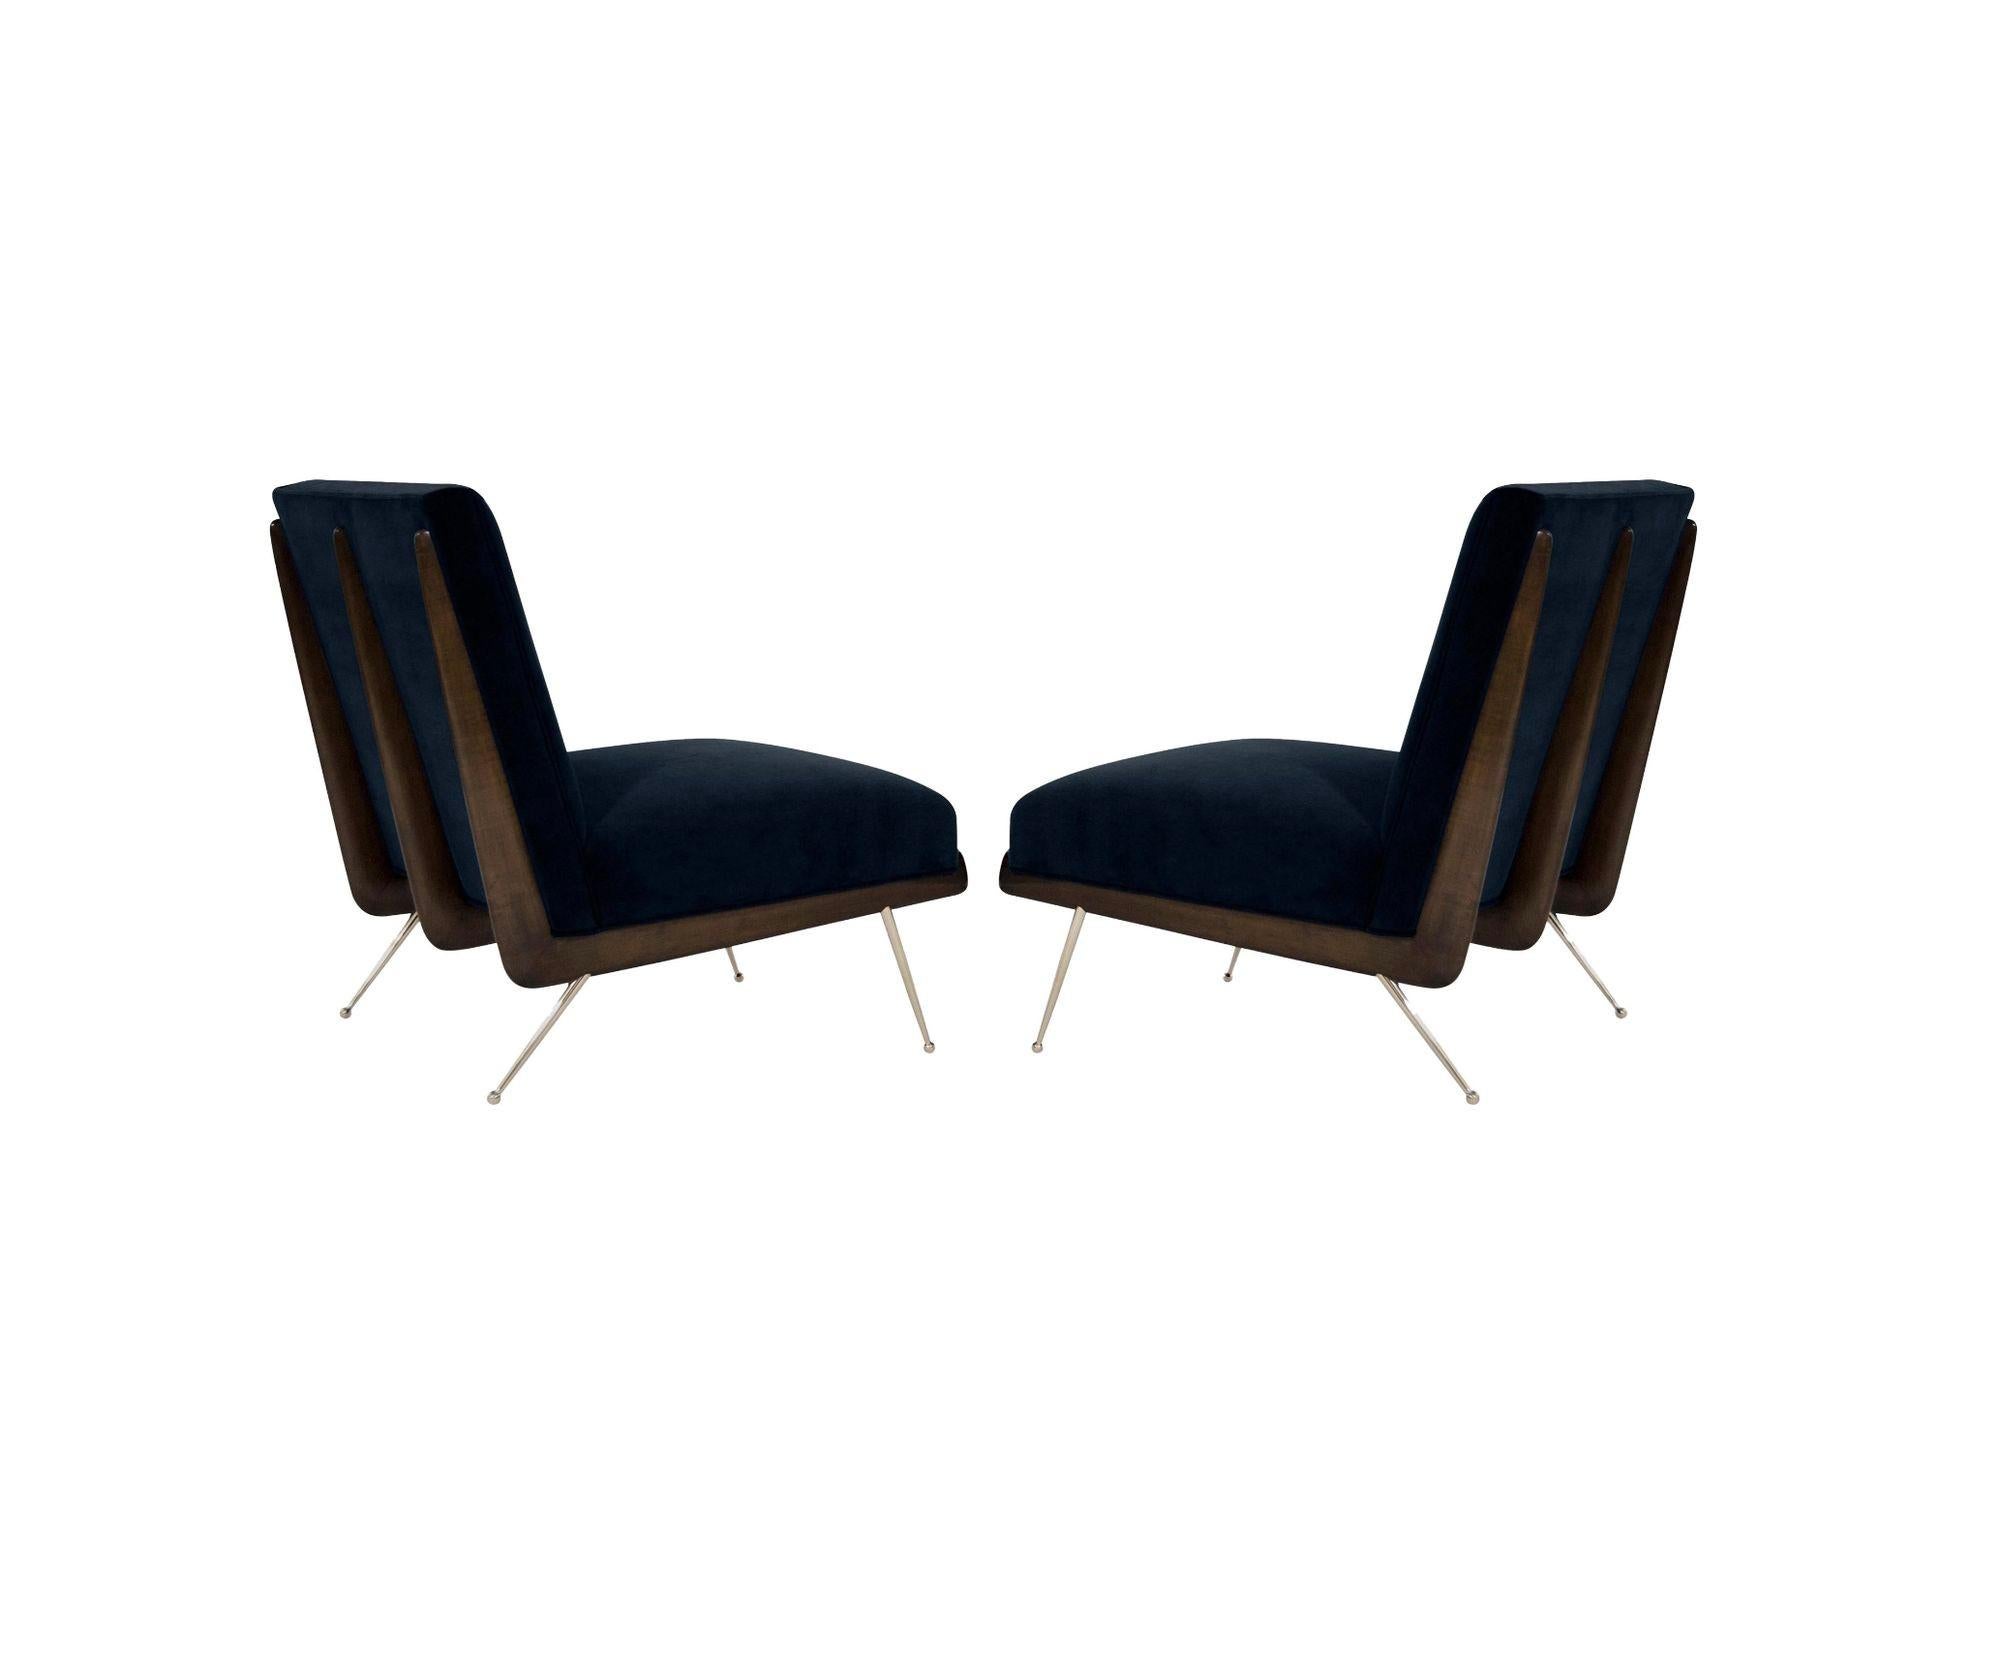 American Walnut Boomerang Lounge Chair in Brass and Dark Walnut by Stamford Modern